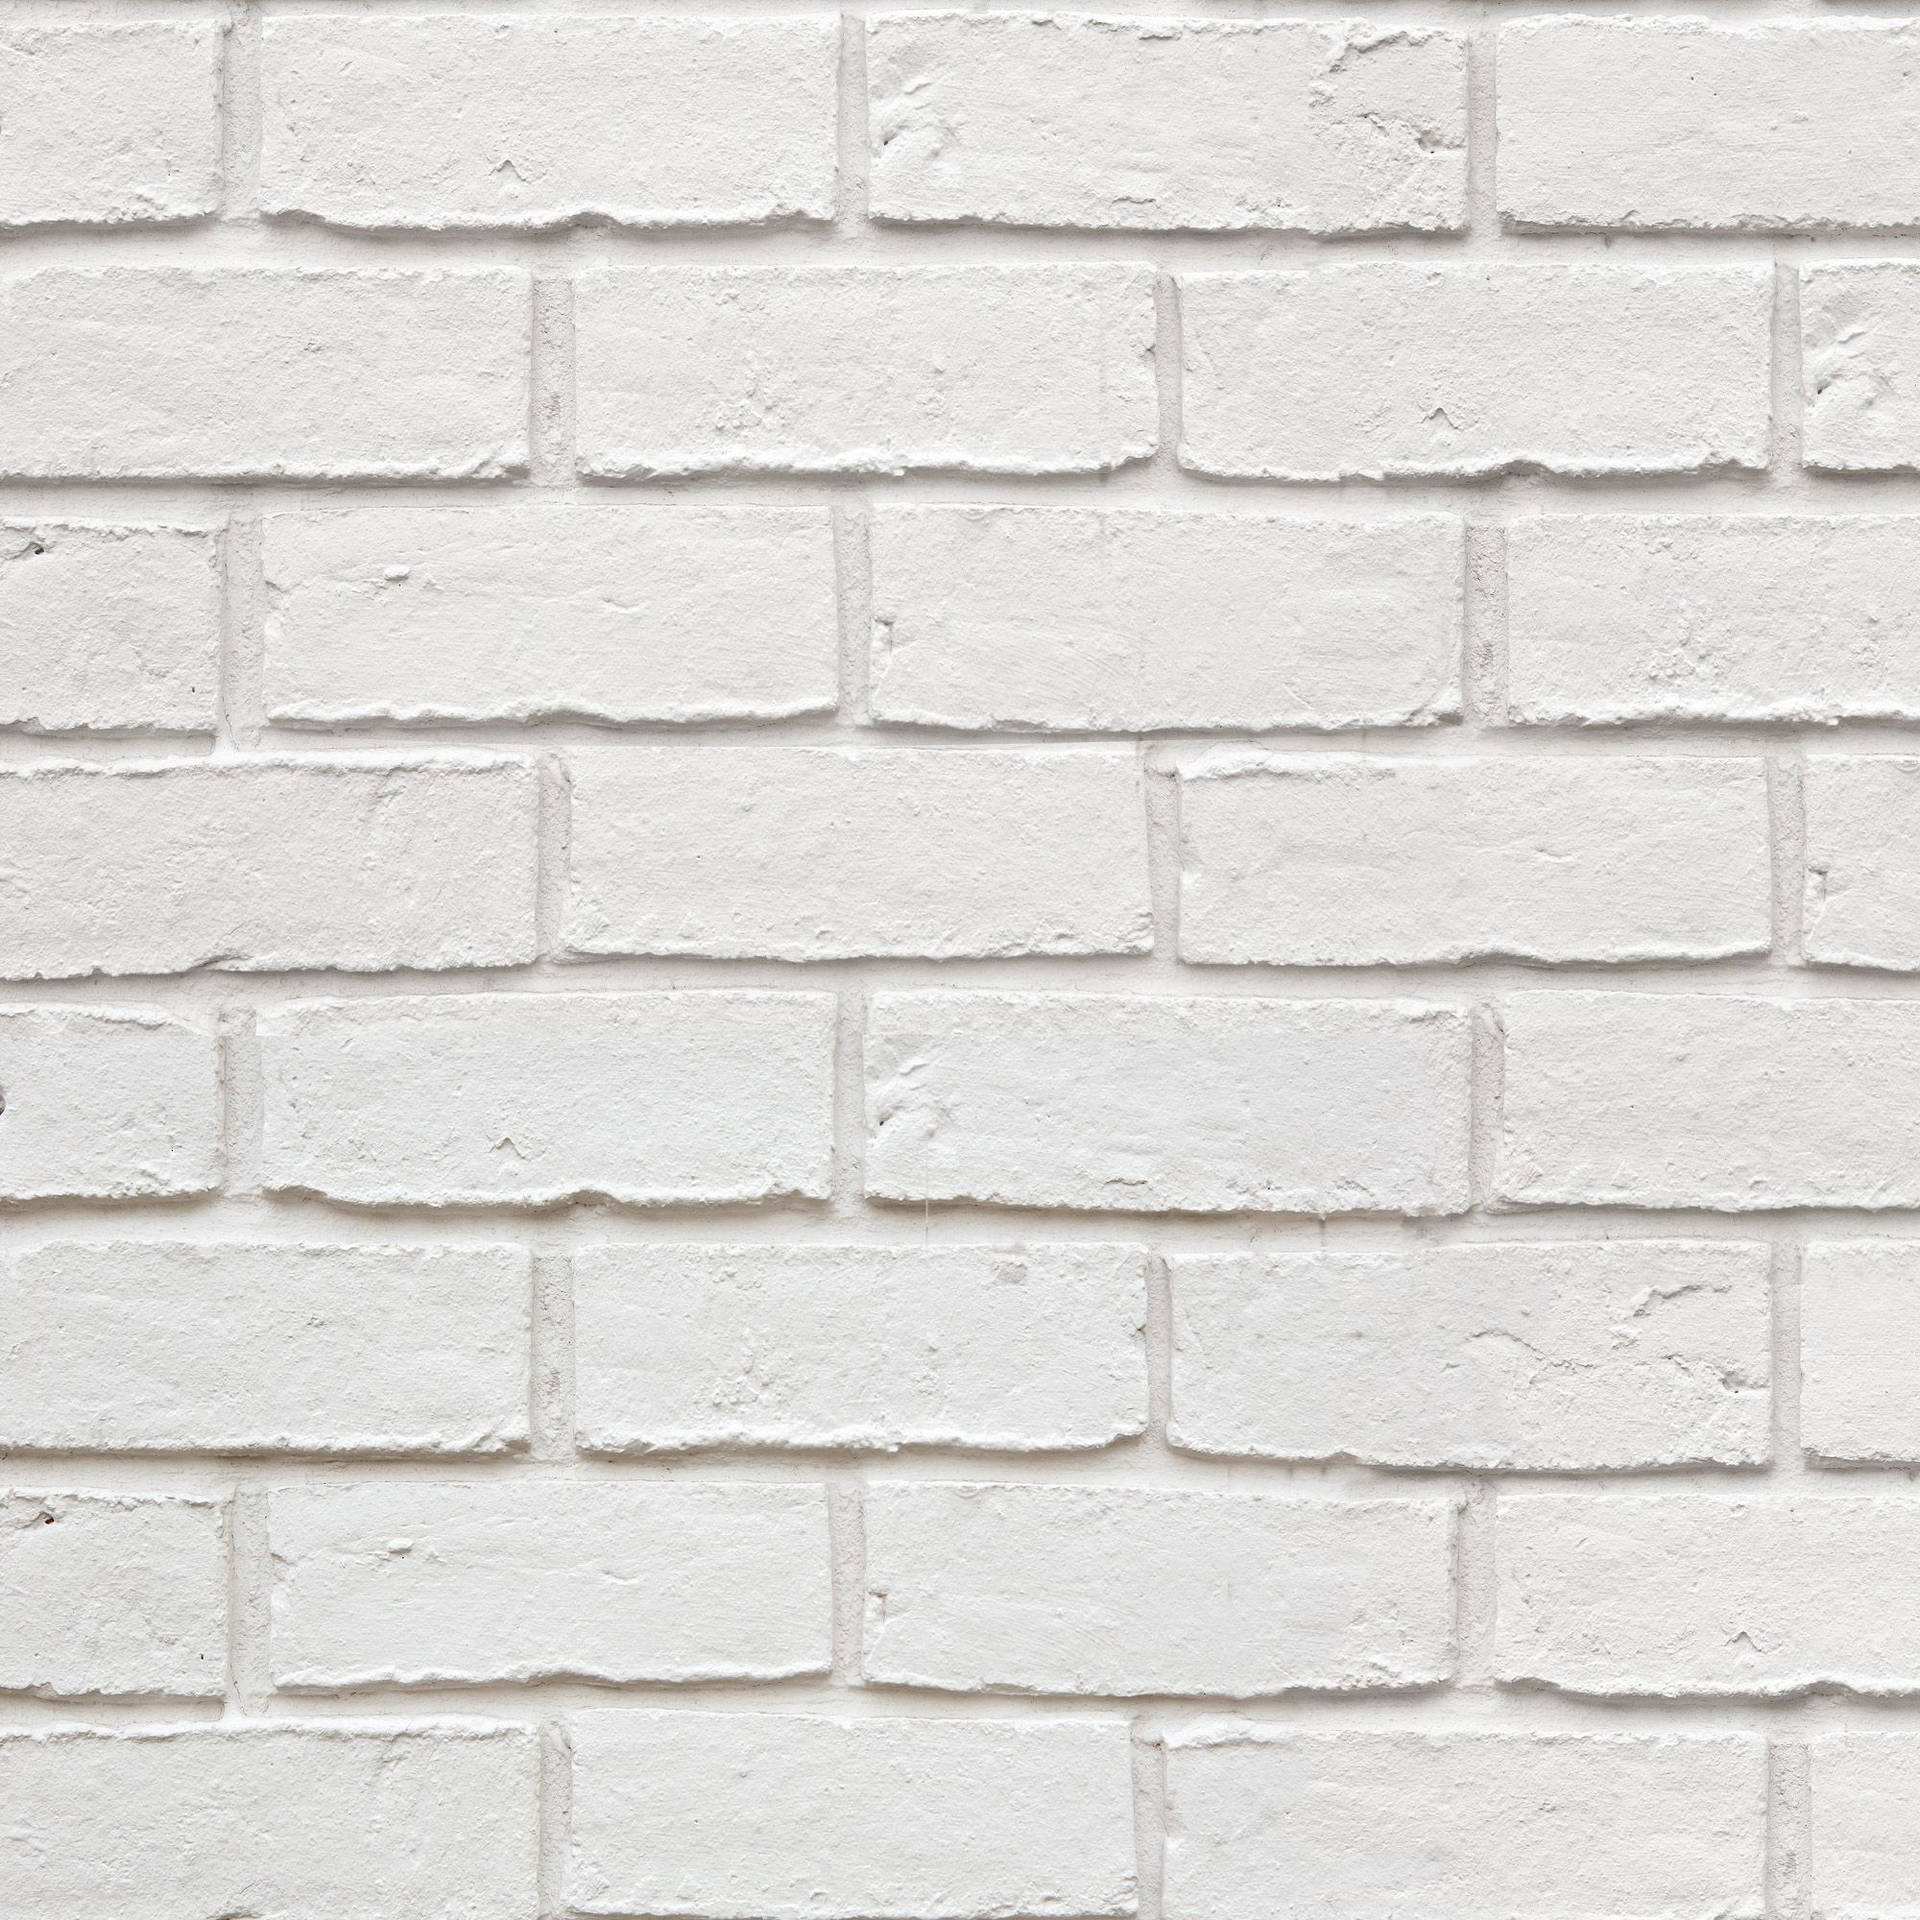 White Brick Wall with Running Bond Wallpaper